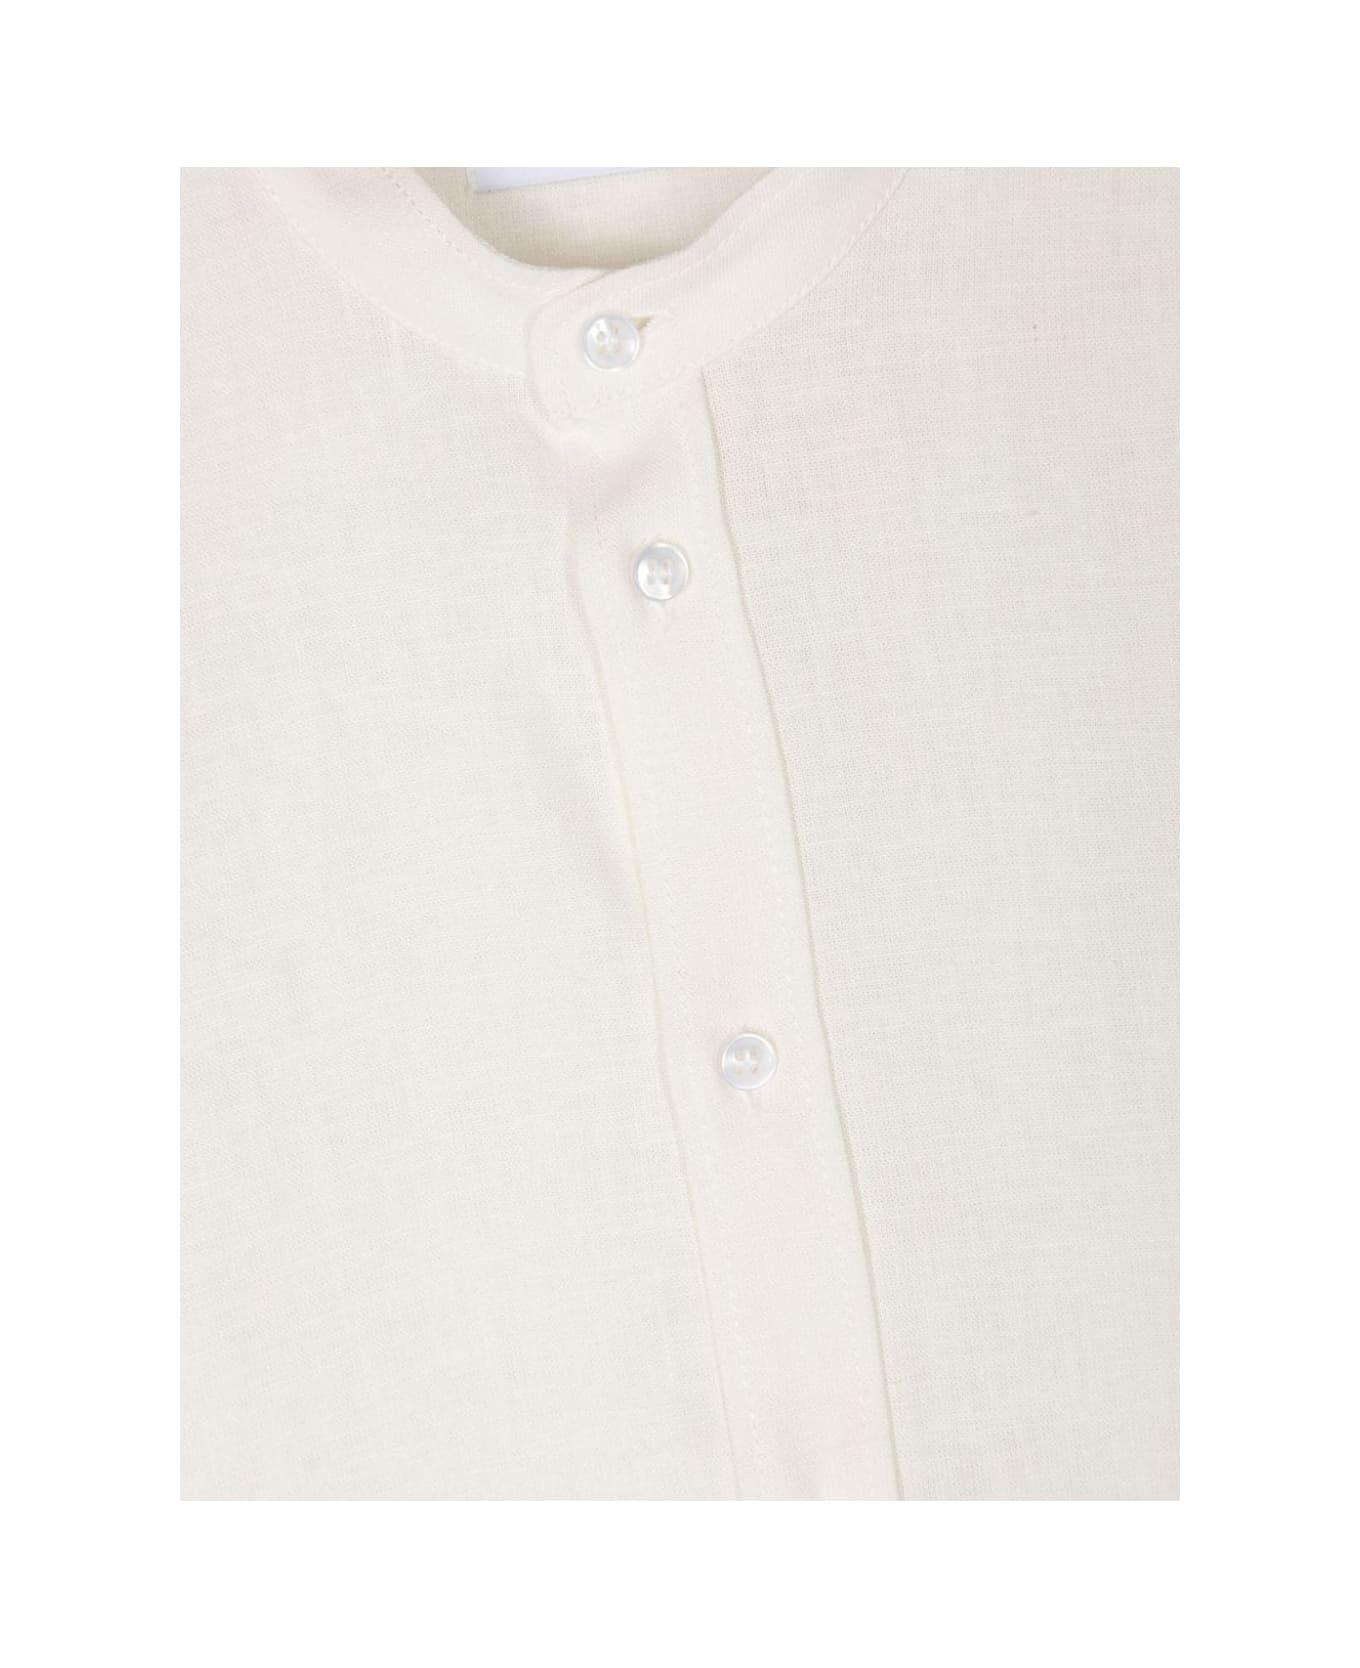 Dondup White Linen Blend Shirt With Mandarin Collar - White